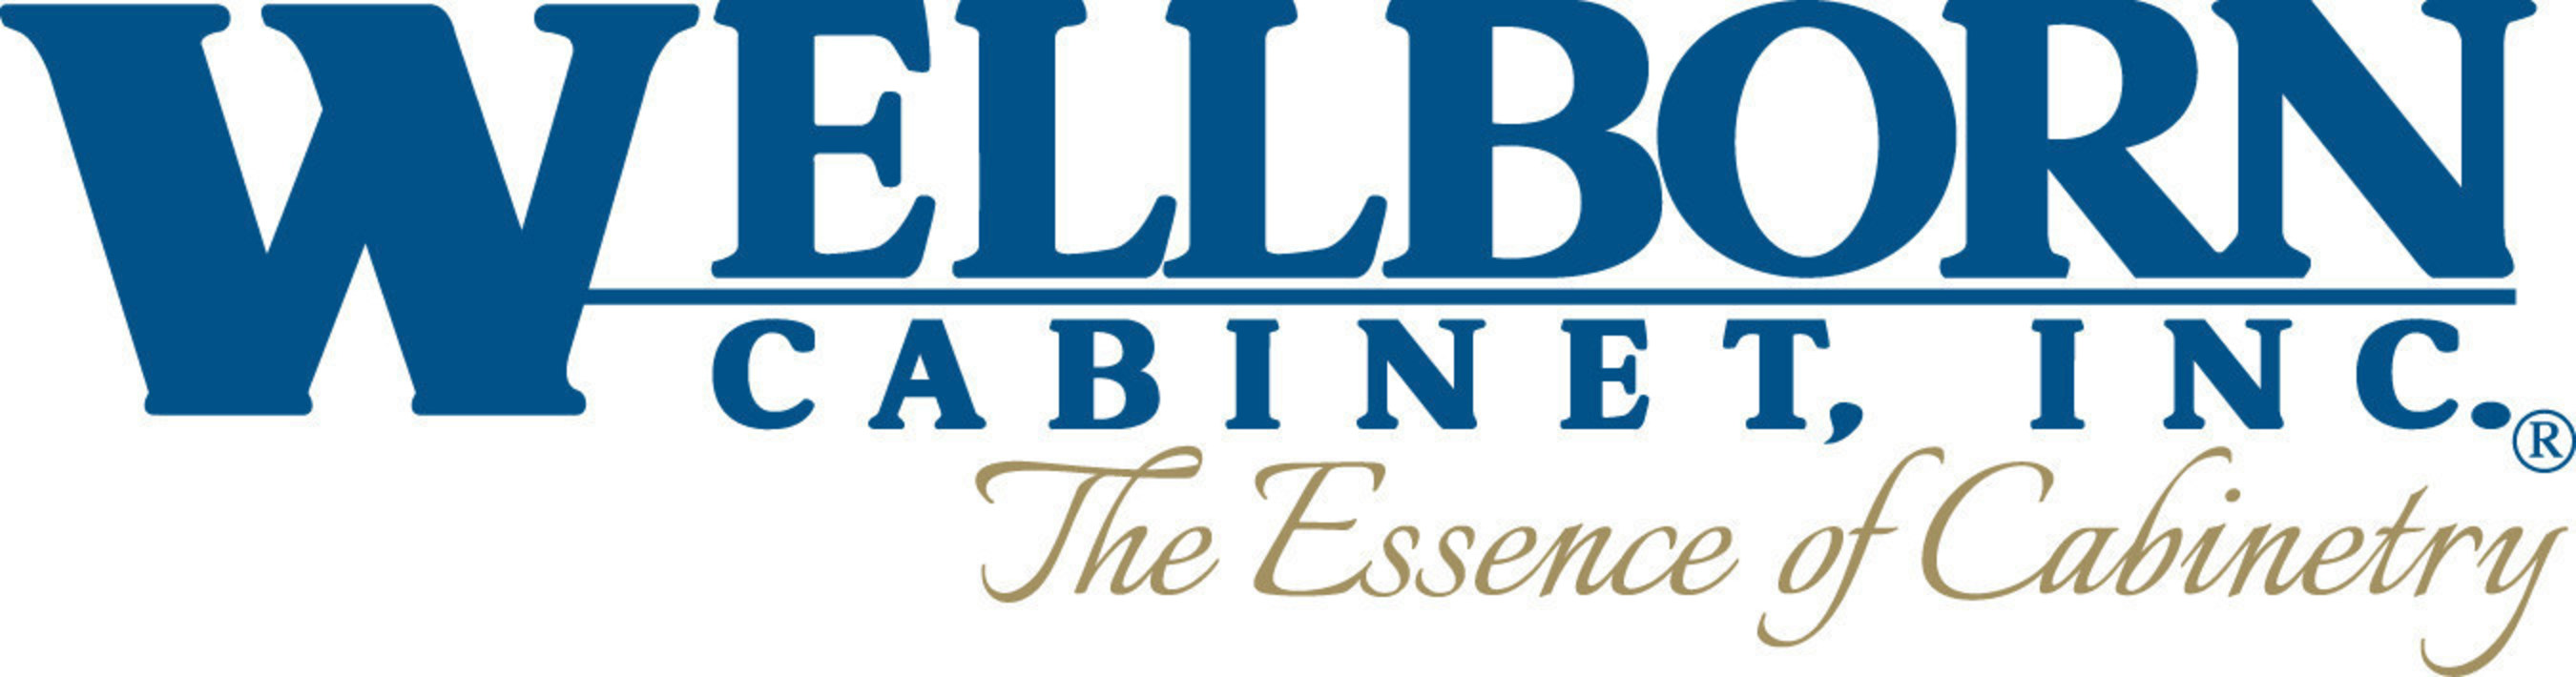 Wellborn Cabinet Inc Introduces Inset